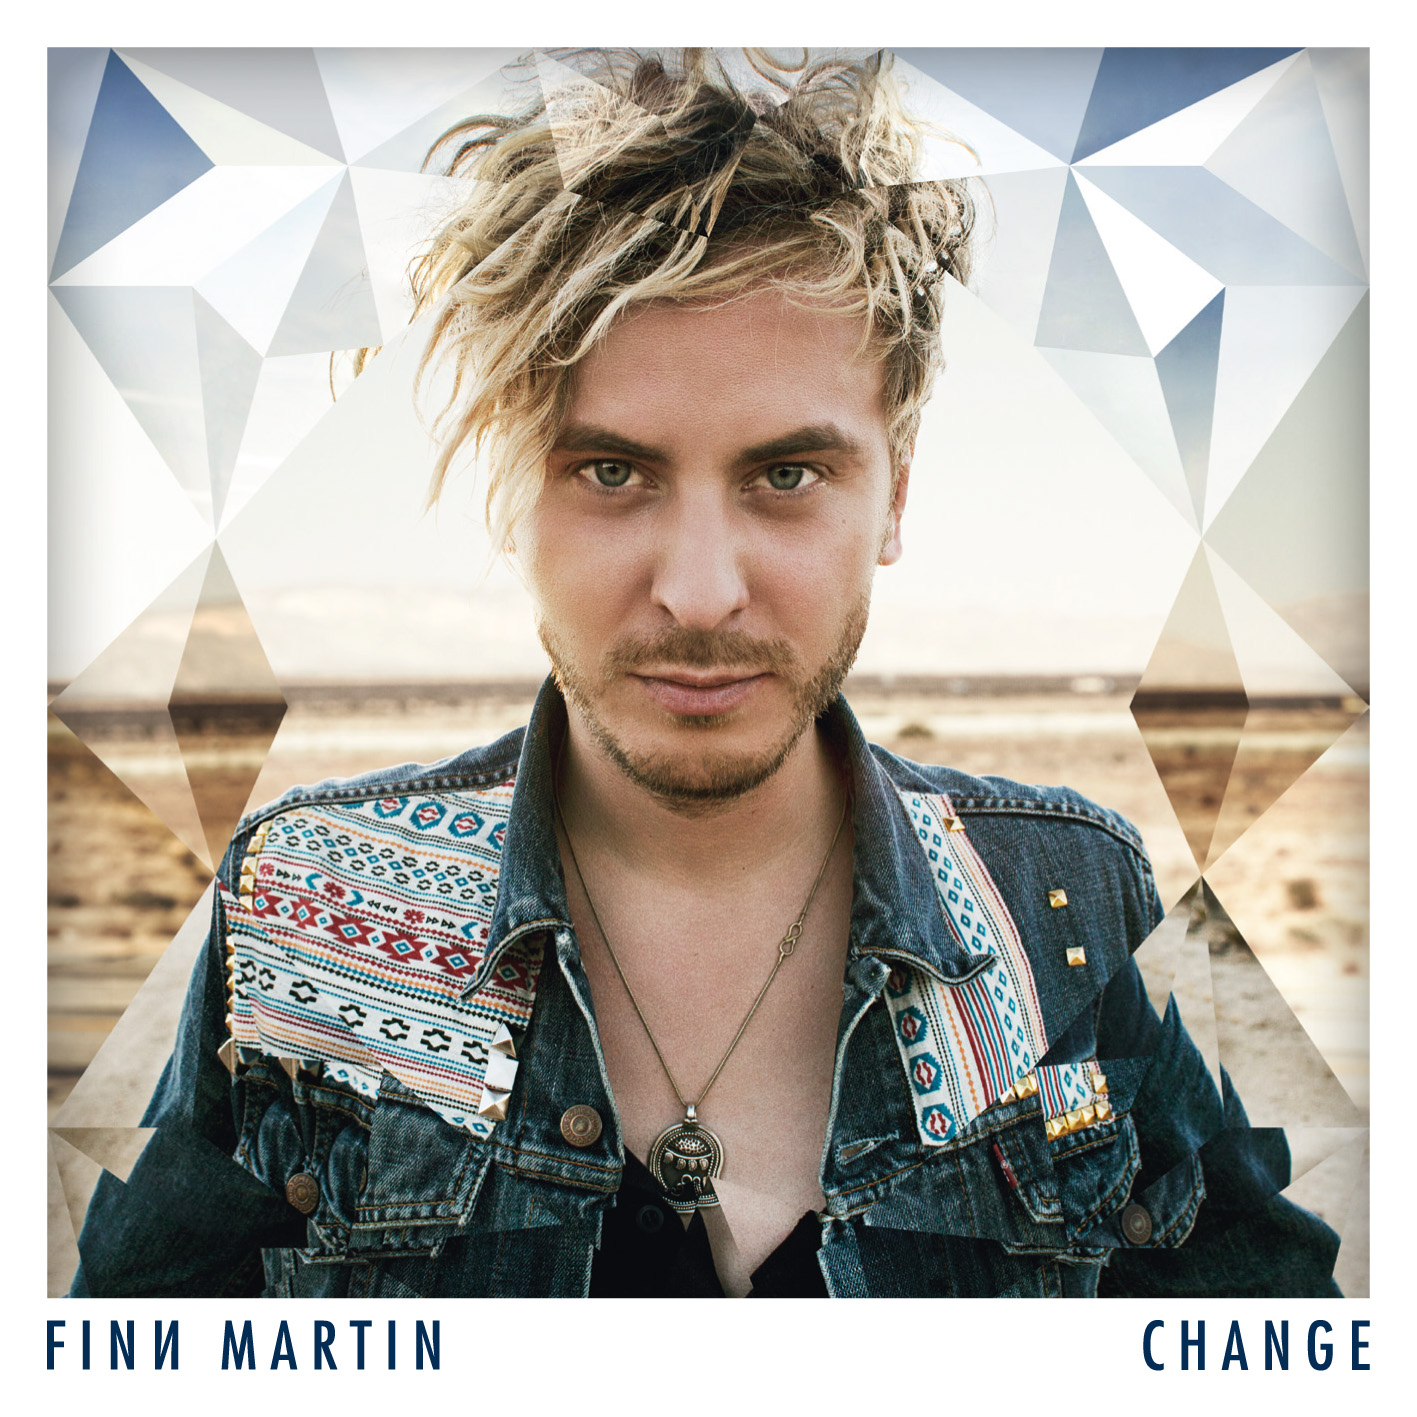 Finn Martin - "Change"